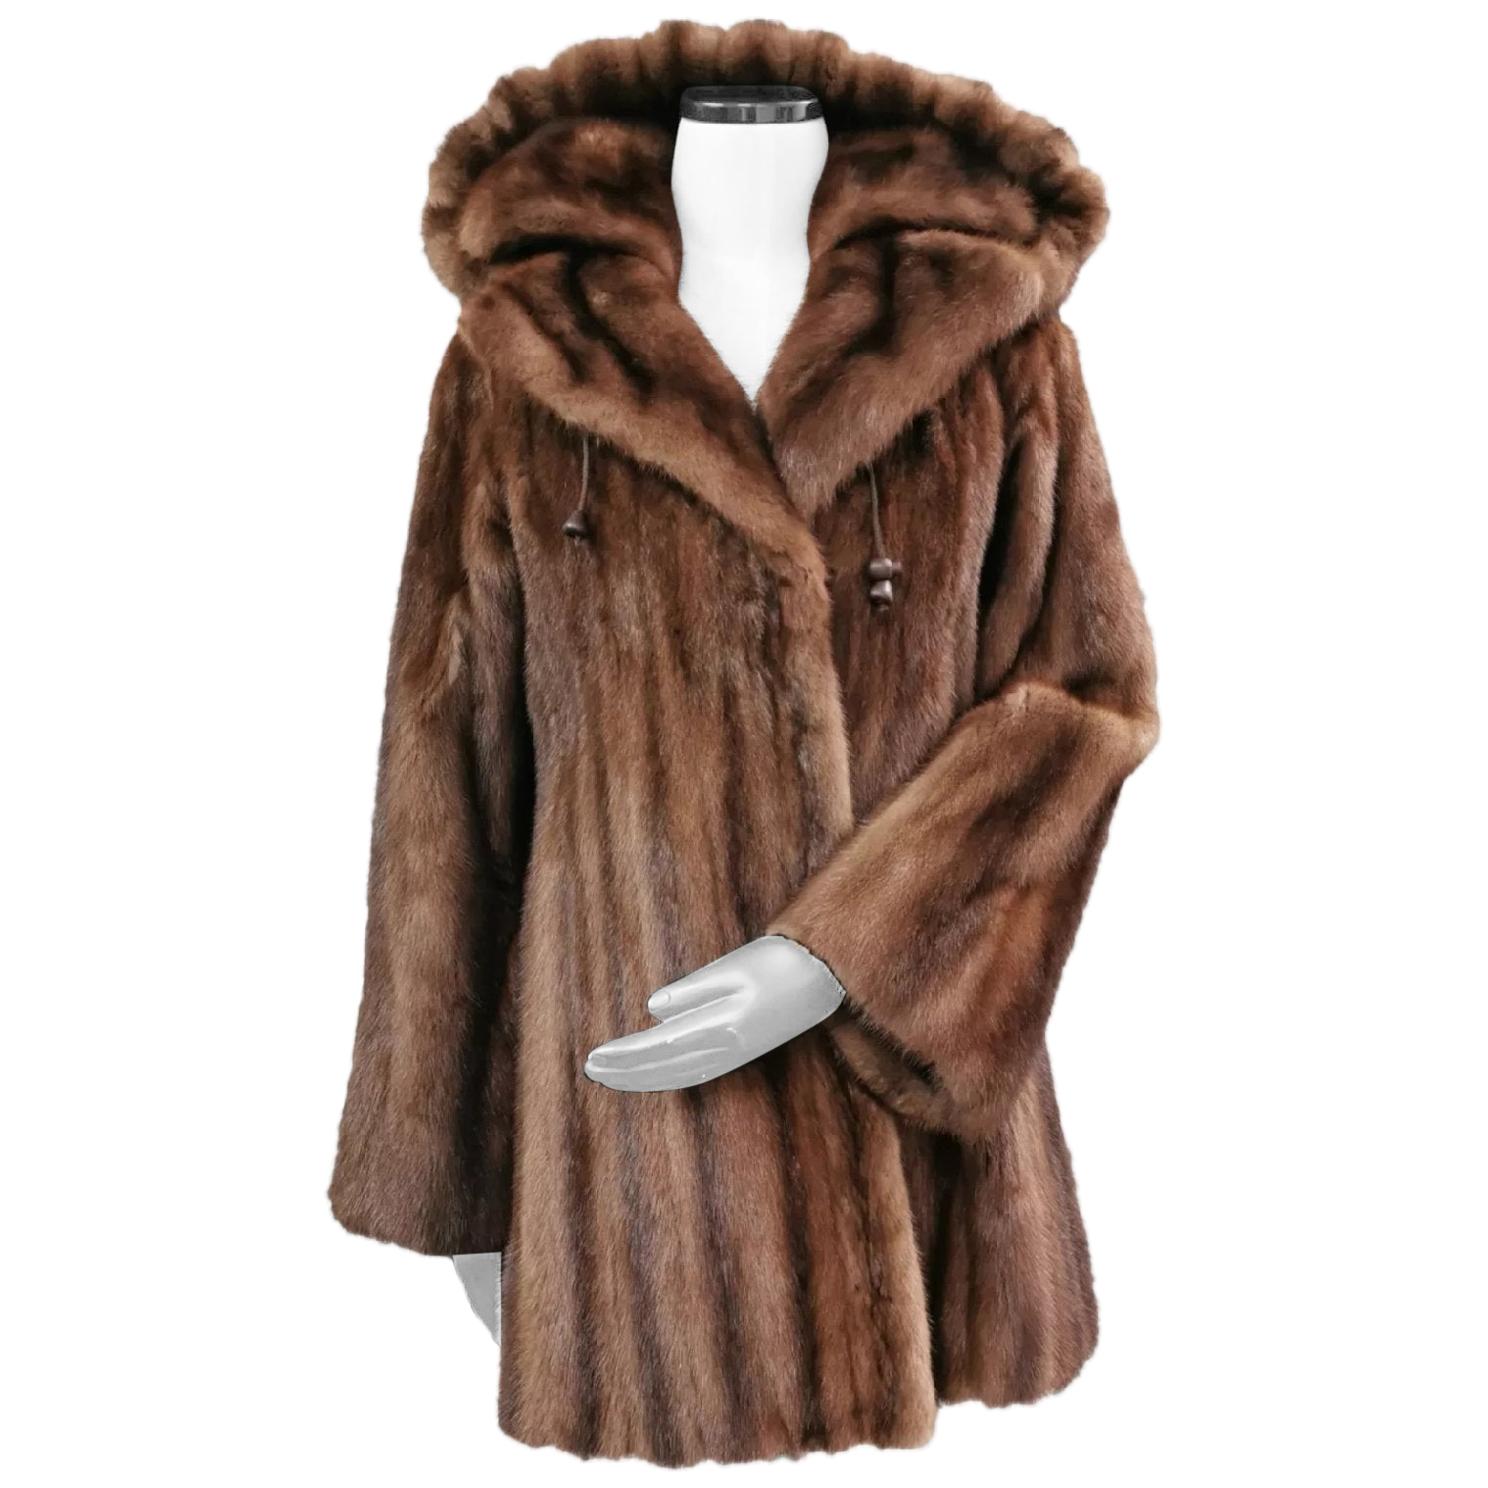 Demi buff mink fur coat with detachable hoodie size 4-6